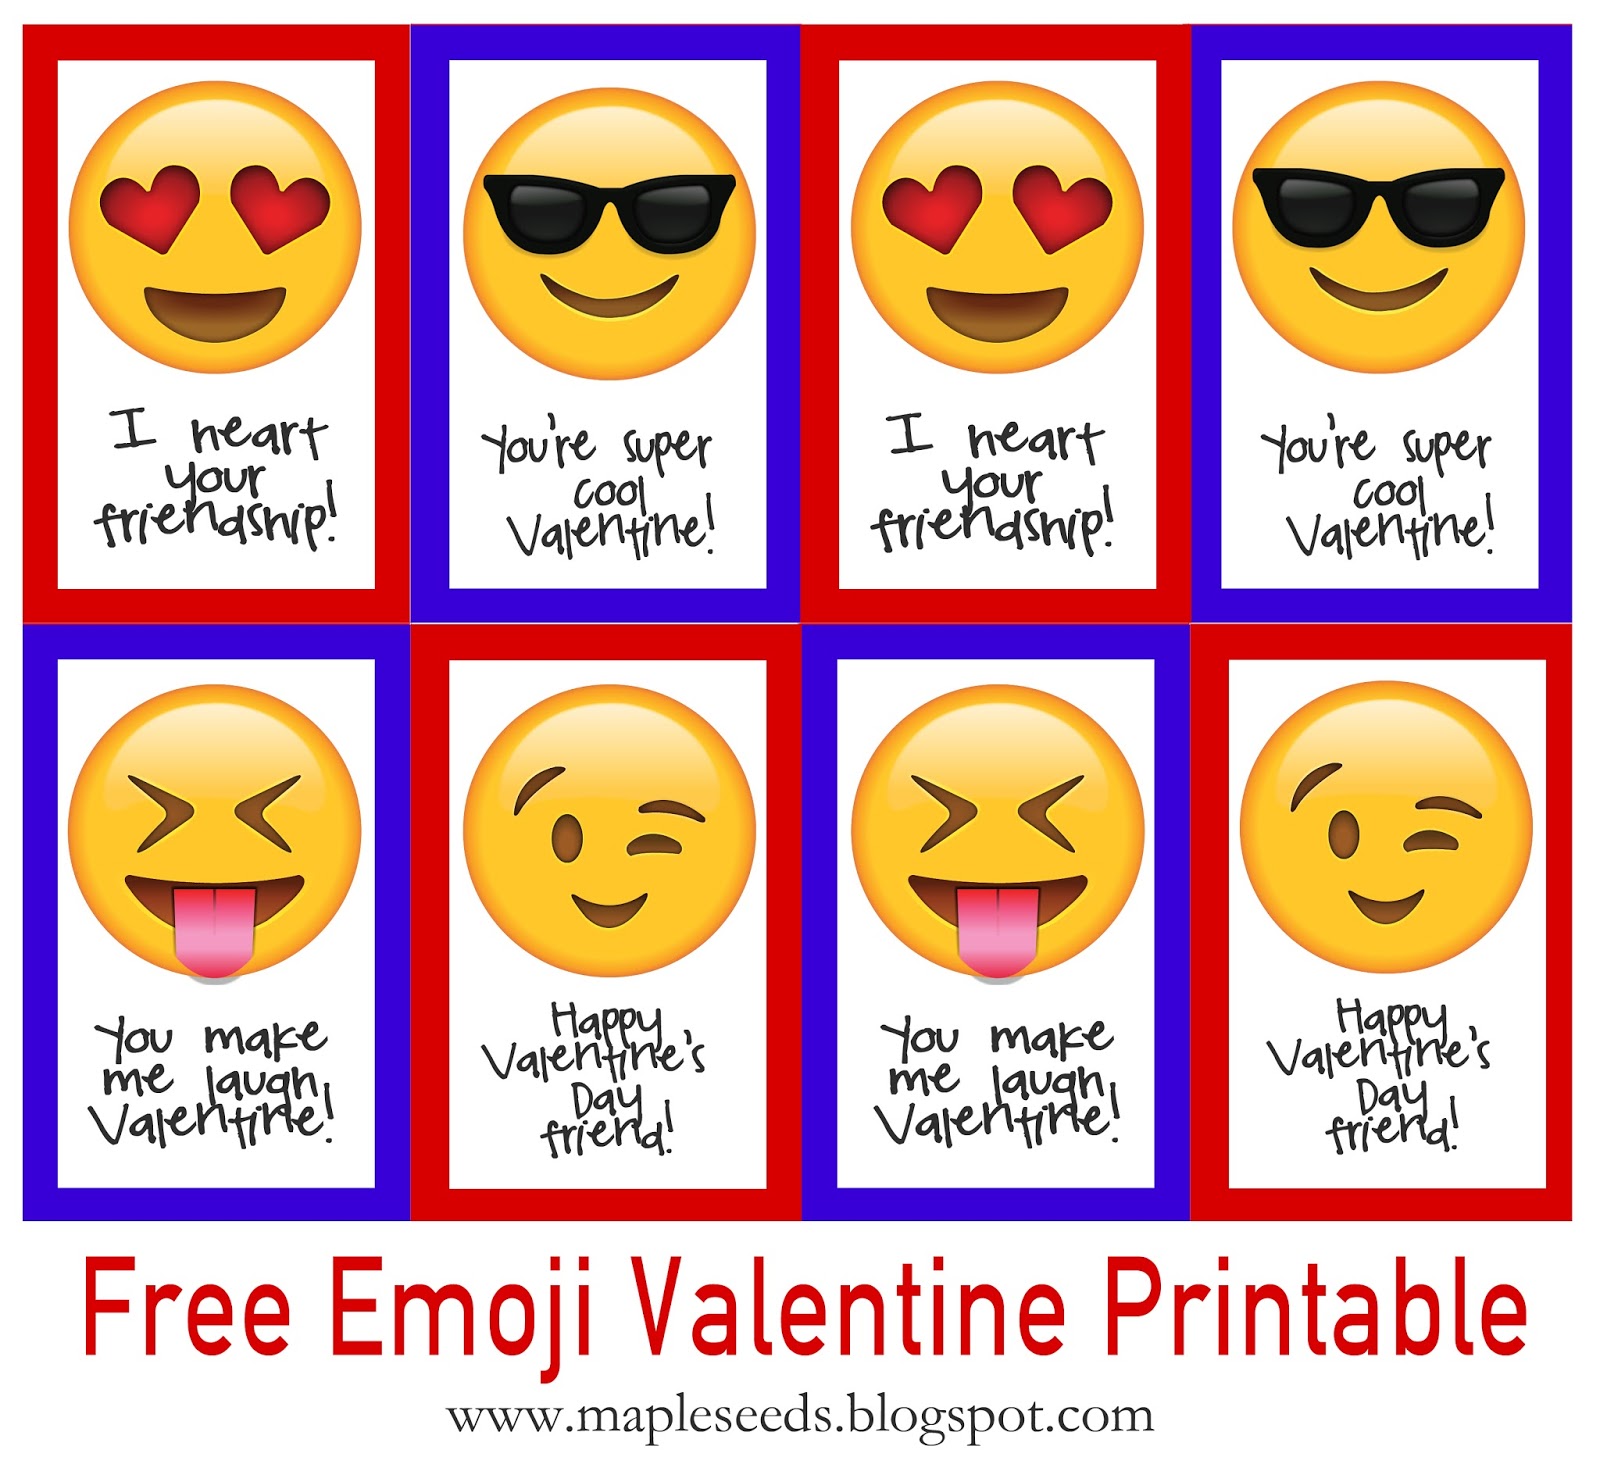 mapleseeds-home-emoji-valentine-free-printable-mapleseeds-home